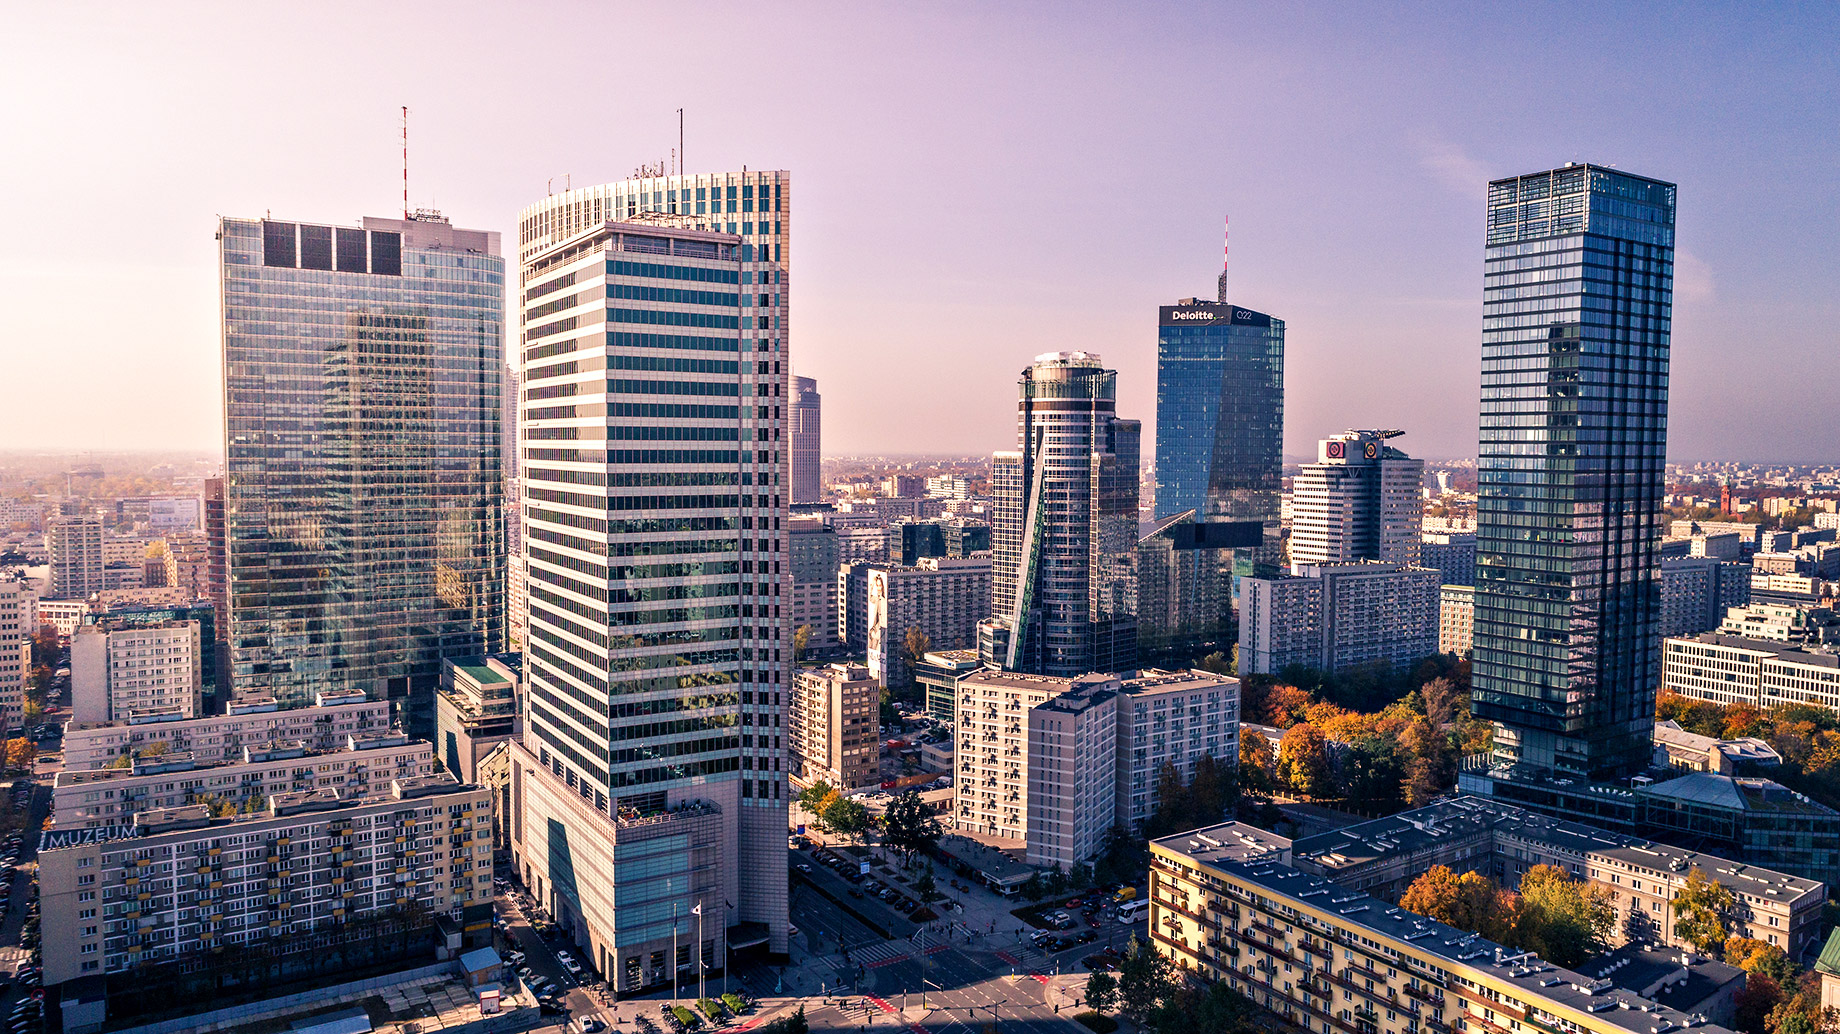 Warsaw, Poland – A Modern Metropolis with Historical Charm